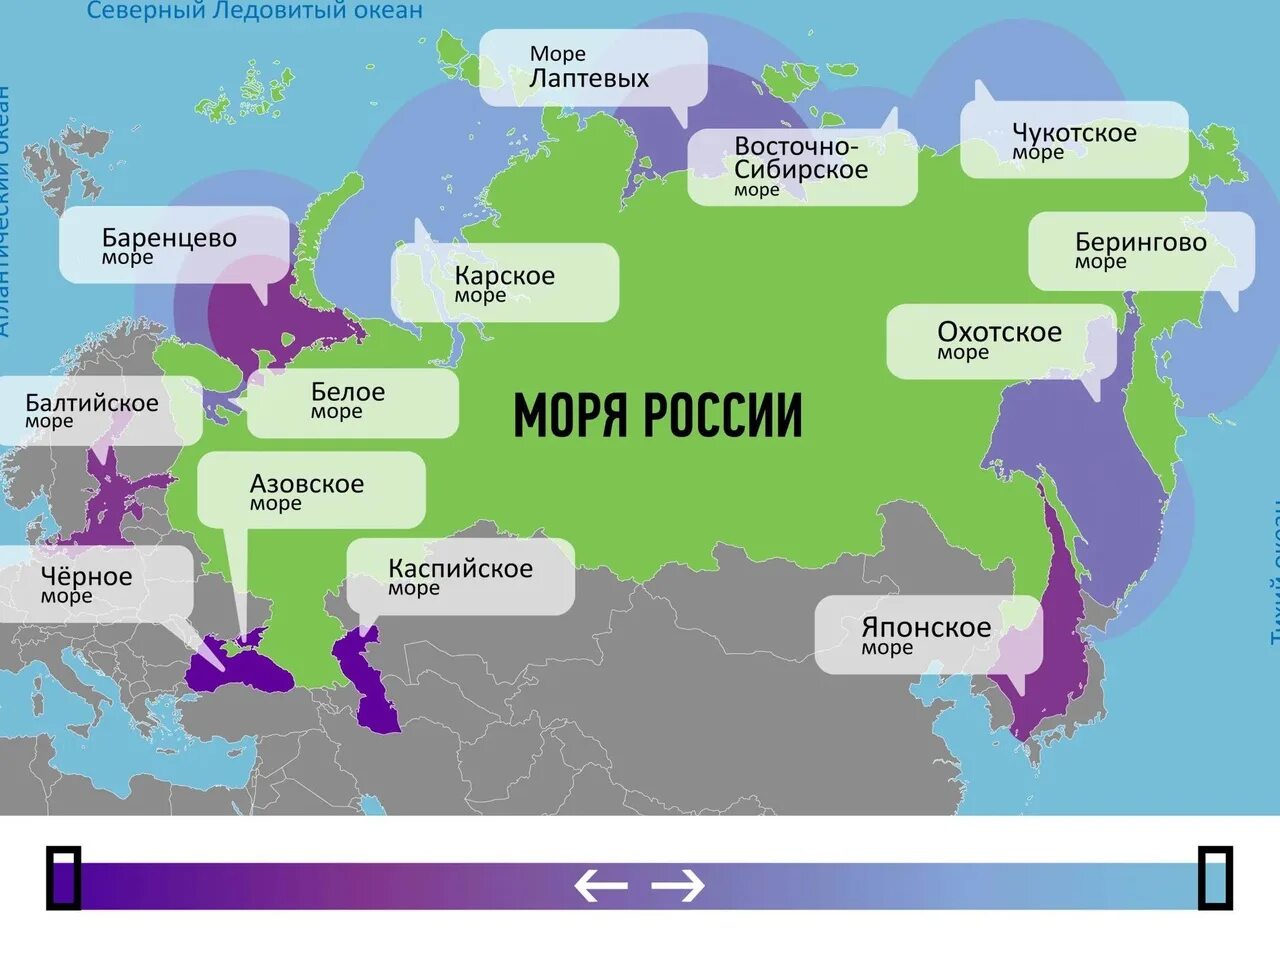 Омывают три океана. Моря омывающие Россию. Моря омывающие Россию на карте. Моря России на карте. Моря и океаны омывающие Россию на карте.